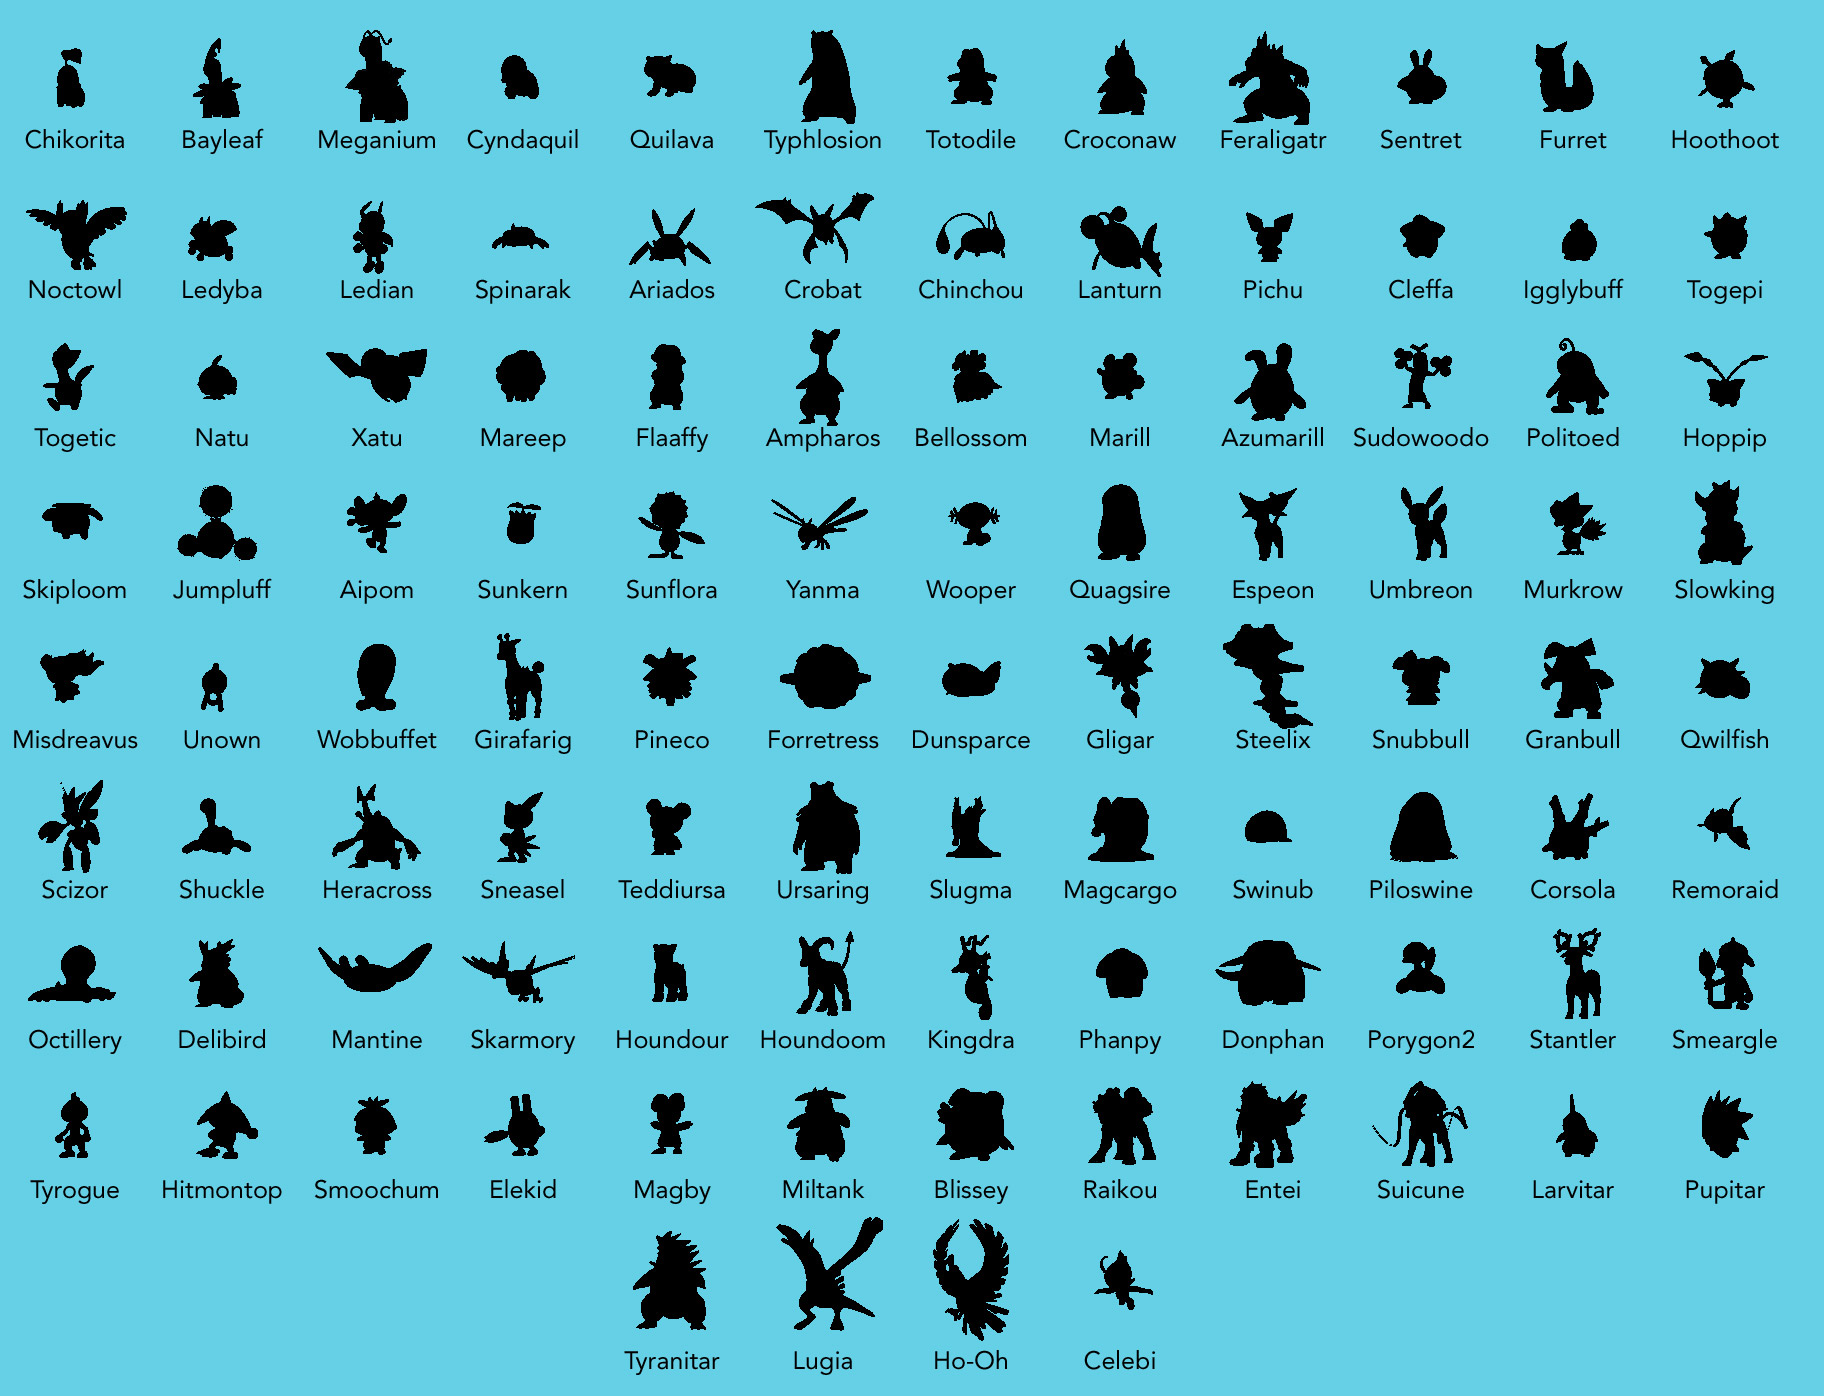 Pokemon Characters Chart